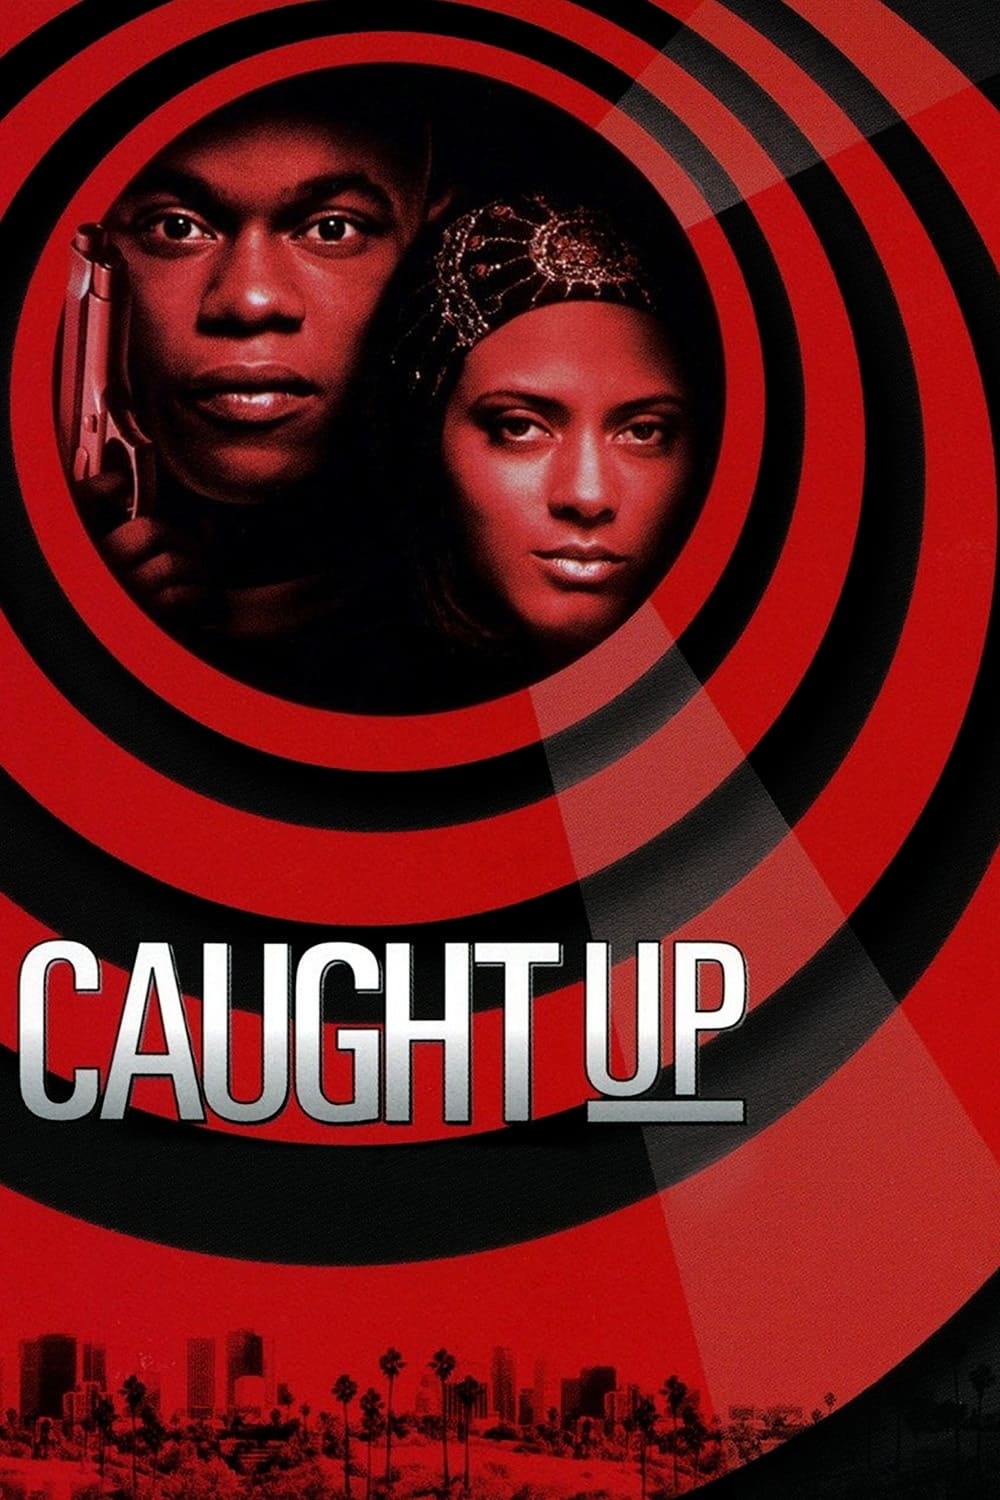 Caught Up (1998)